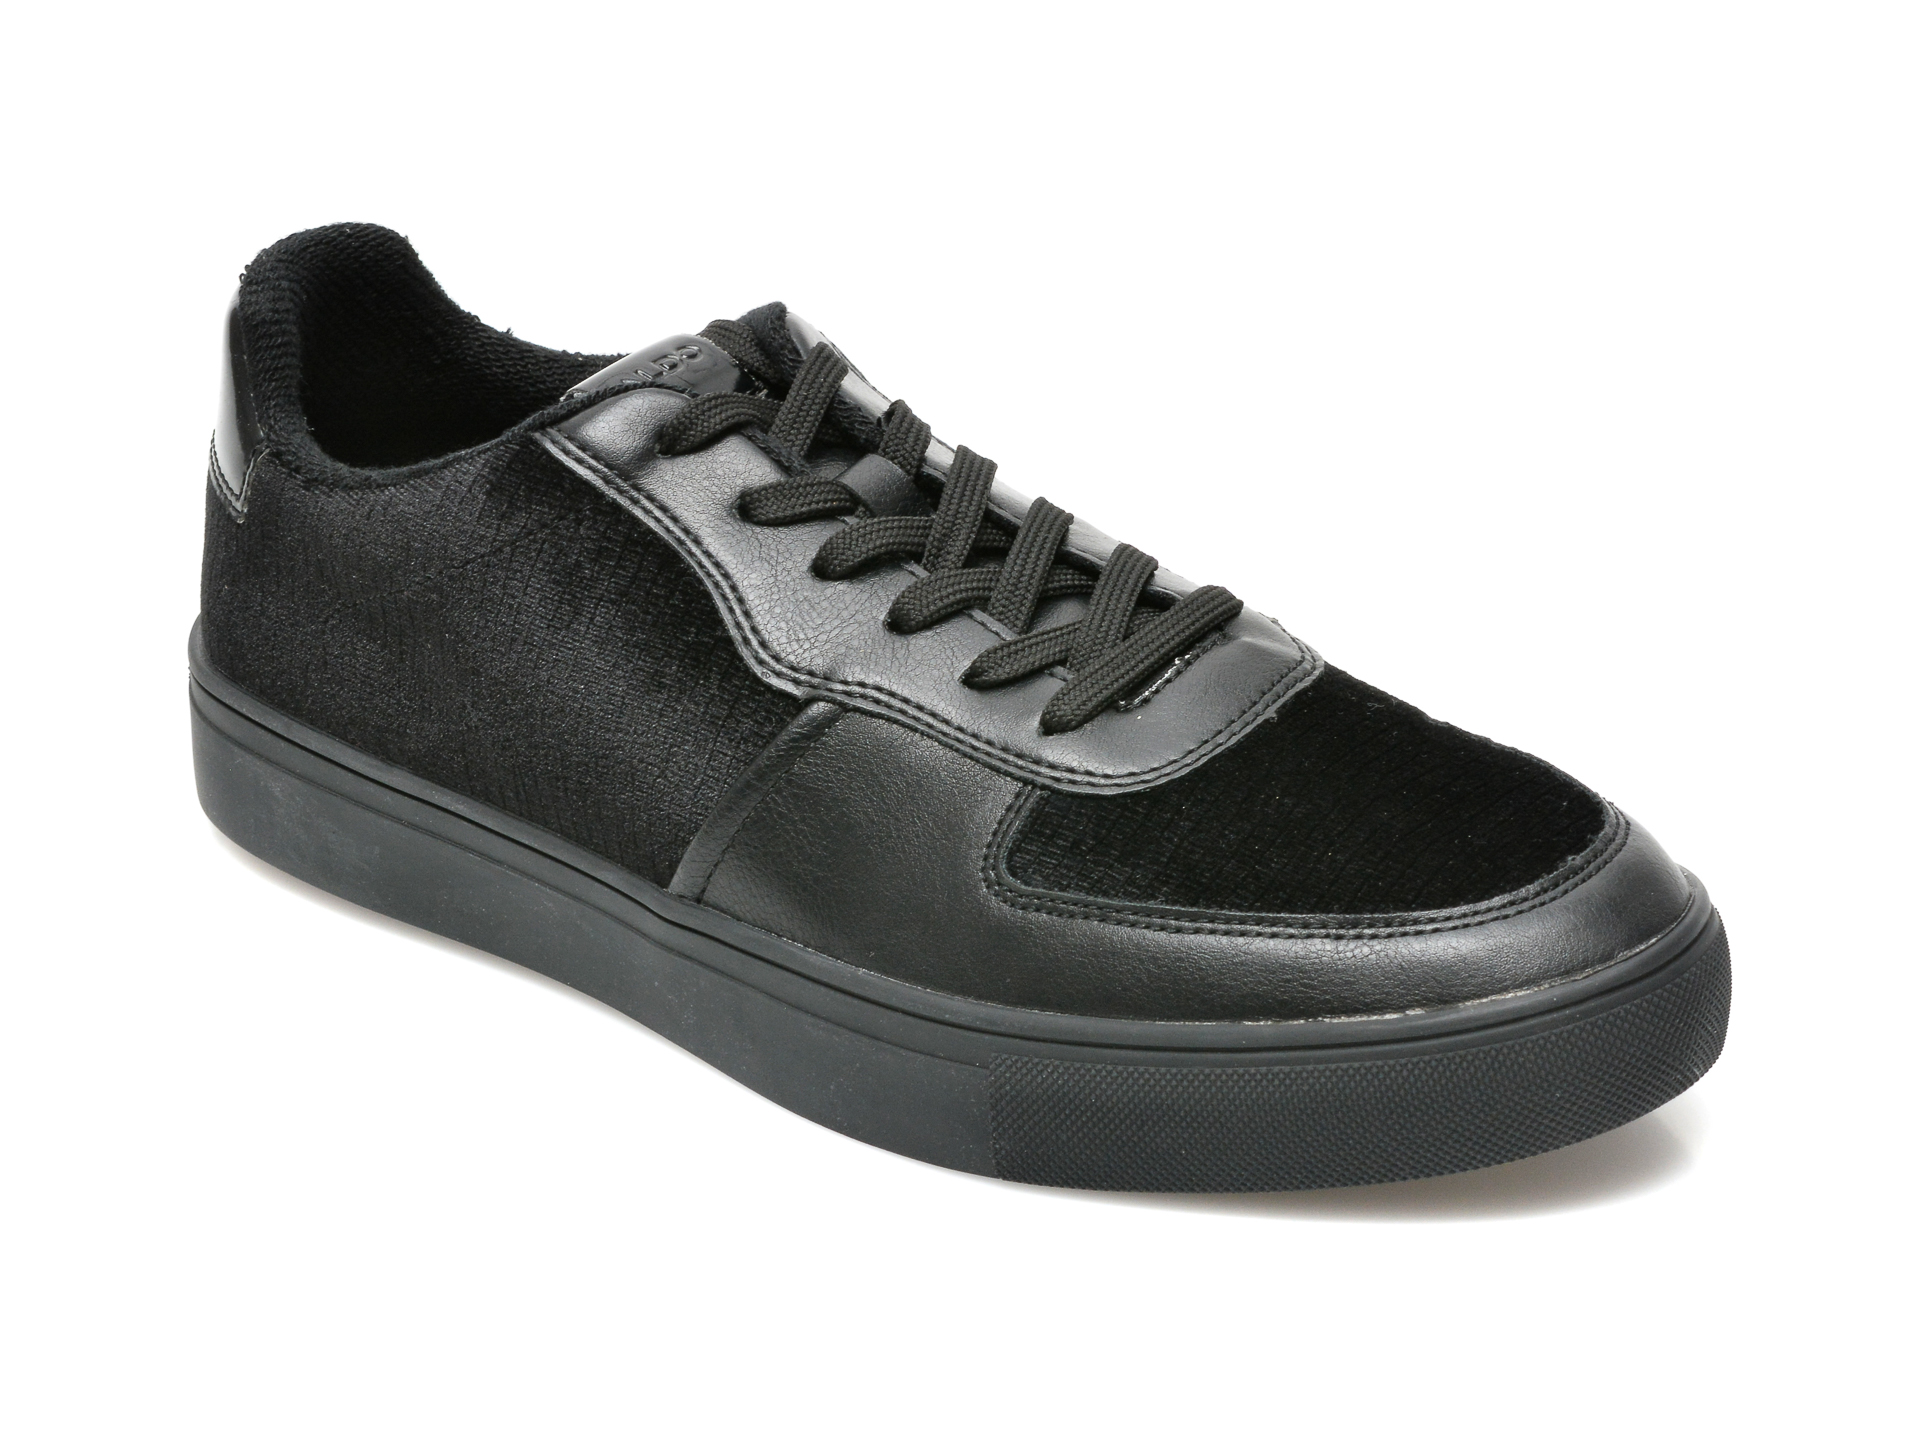 Pantofi ALDO negri, KION007, din material textil si piele ecologica Aldo